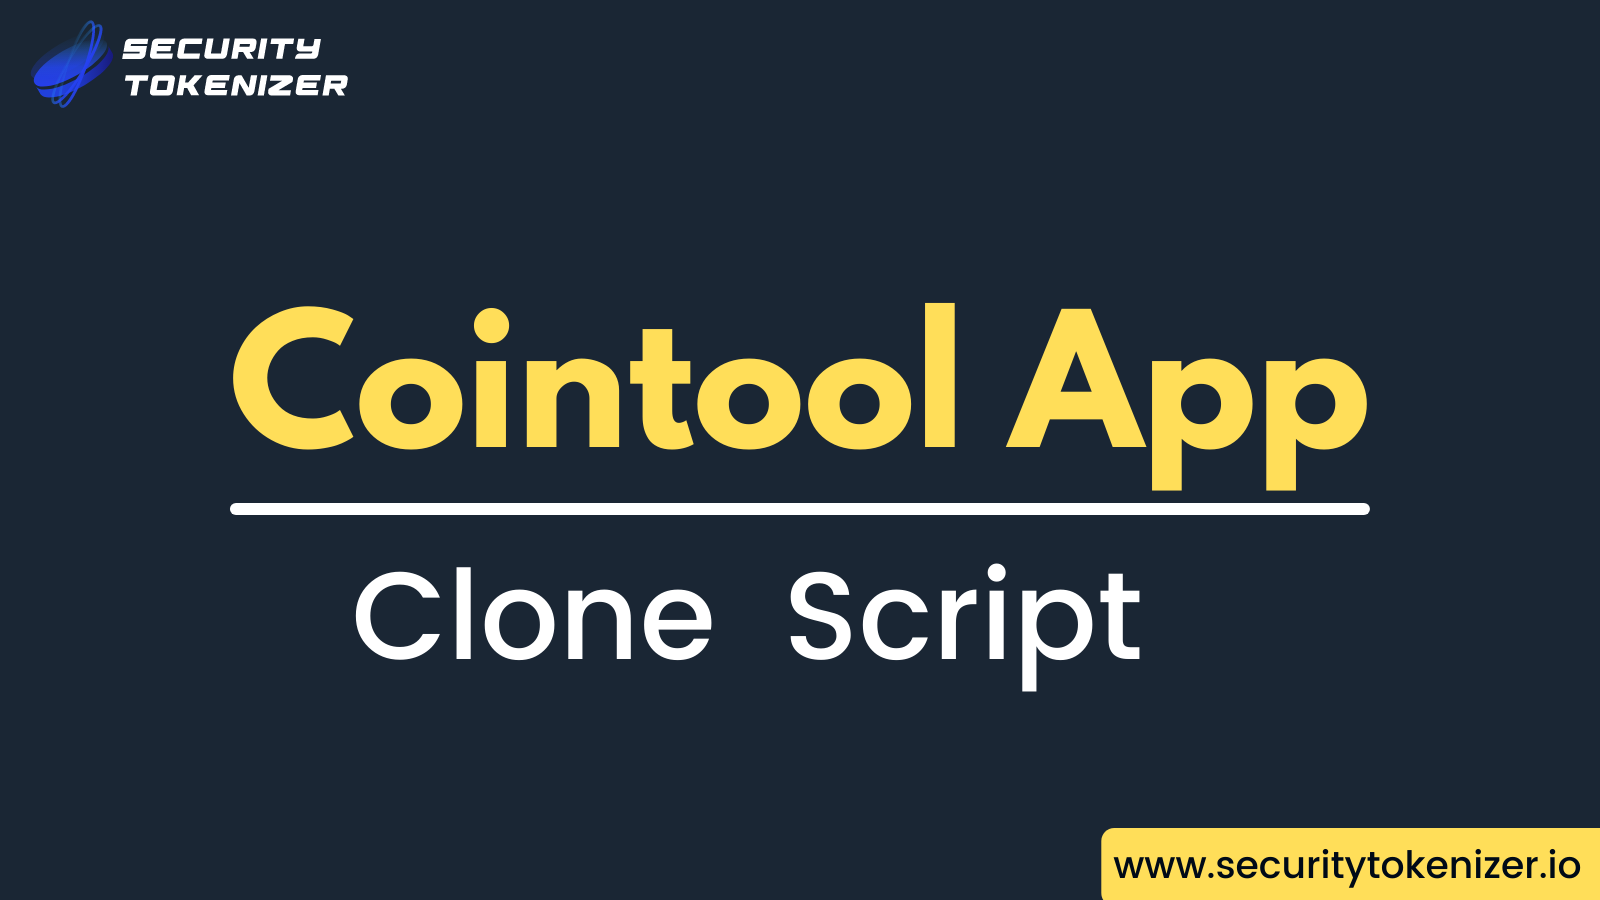 Cointool App Clone Script - To Create Token Generator Platform Like Cointool